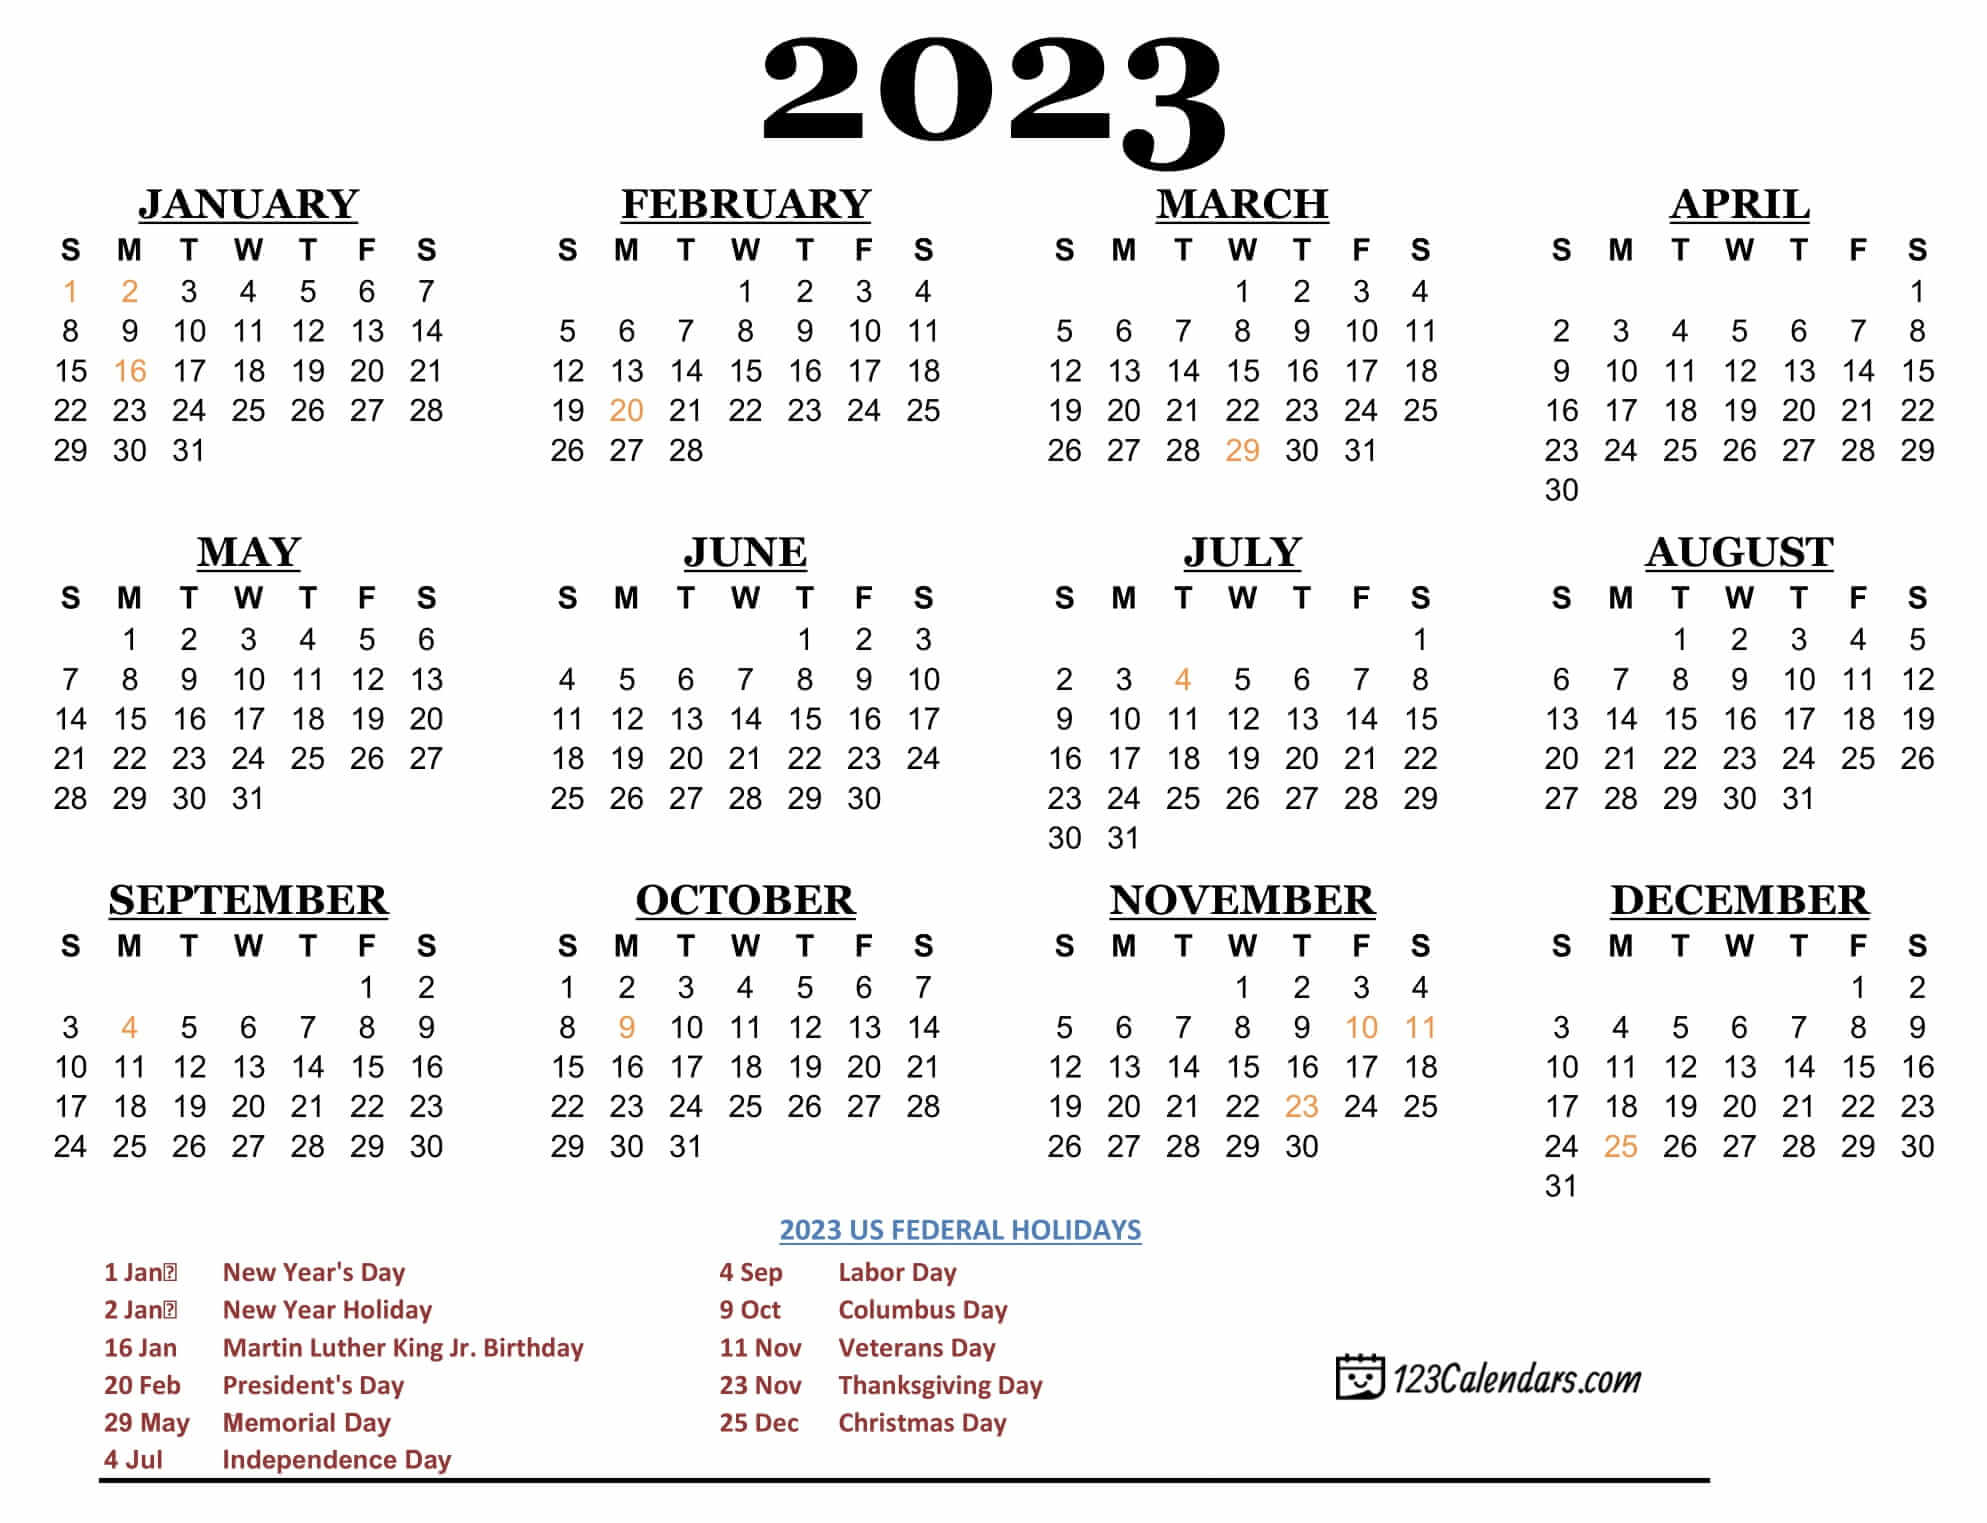 Year 2023 Calendar Templates